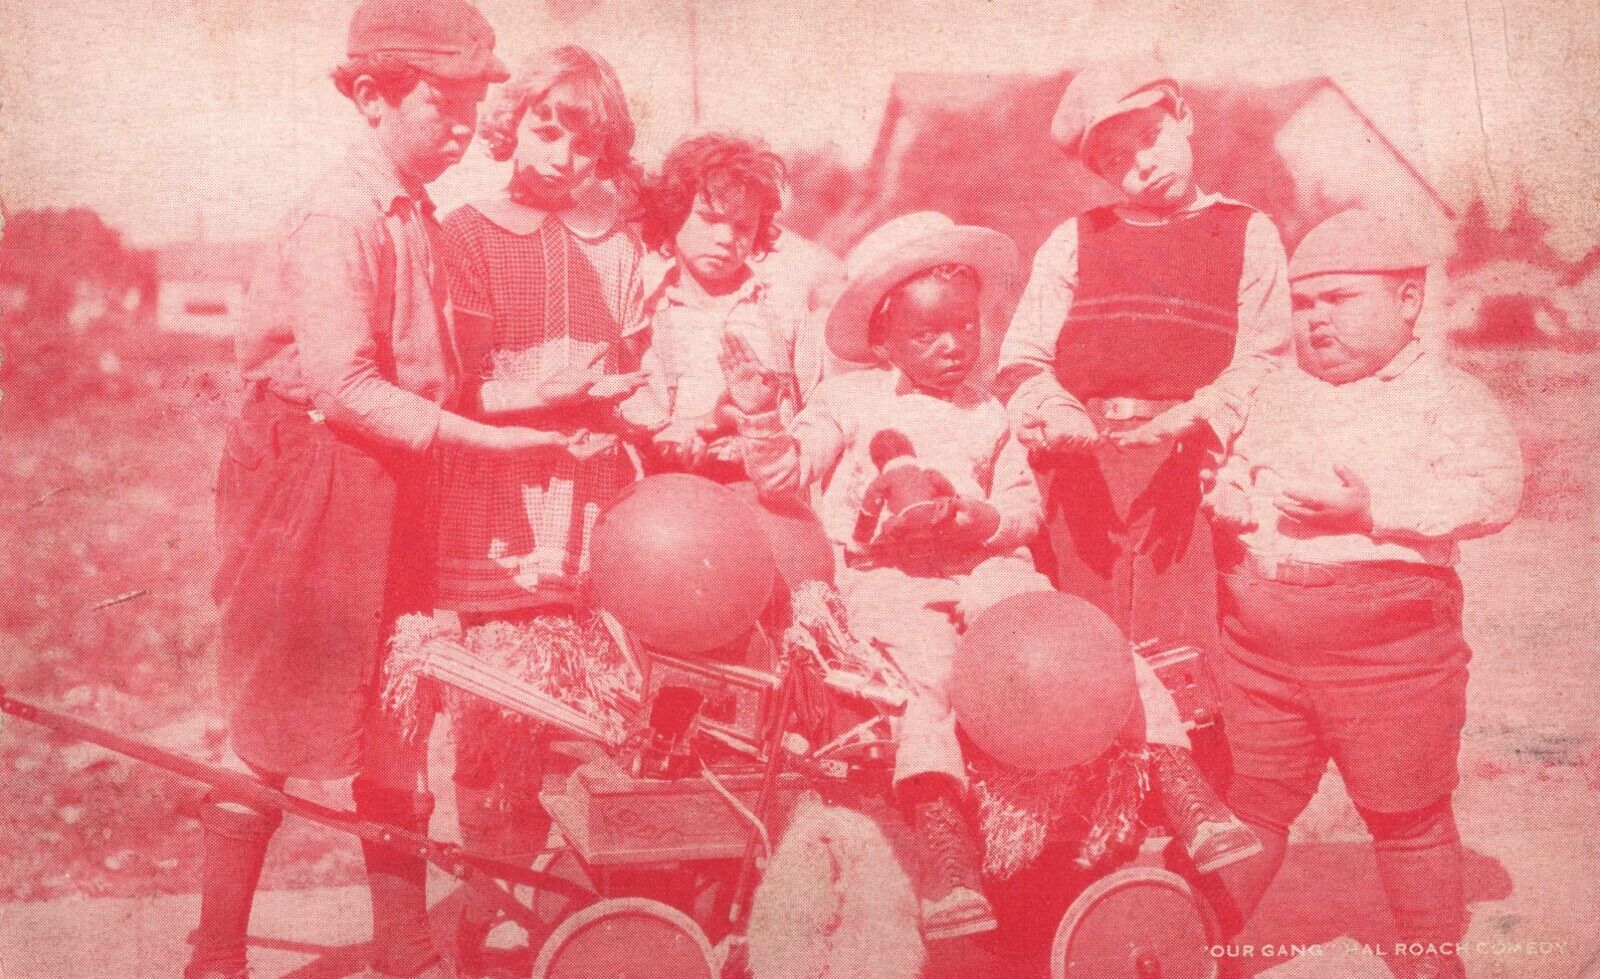 Our Gang Hal Roach Comedy Little Rascals Ⓒ 1925–30 Exhibit Arcade Card Postcard